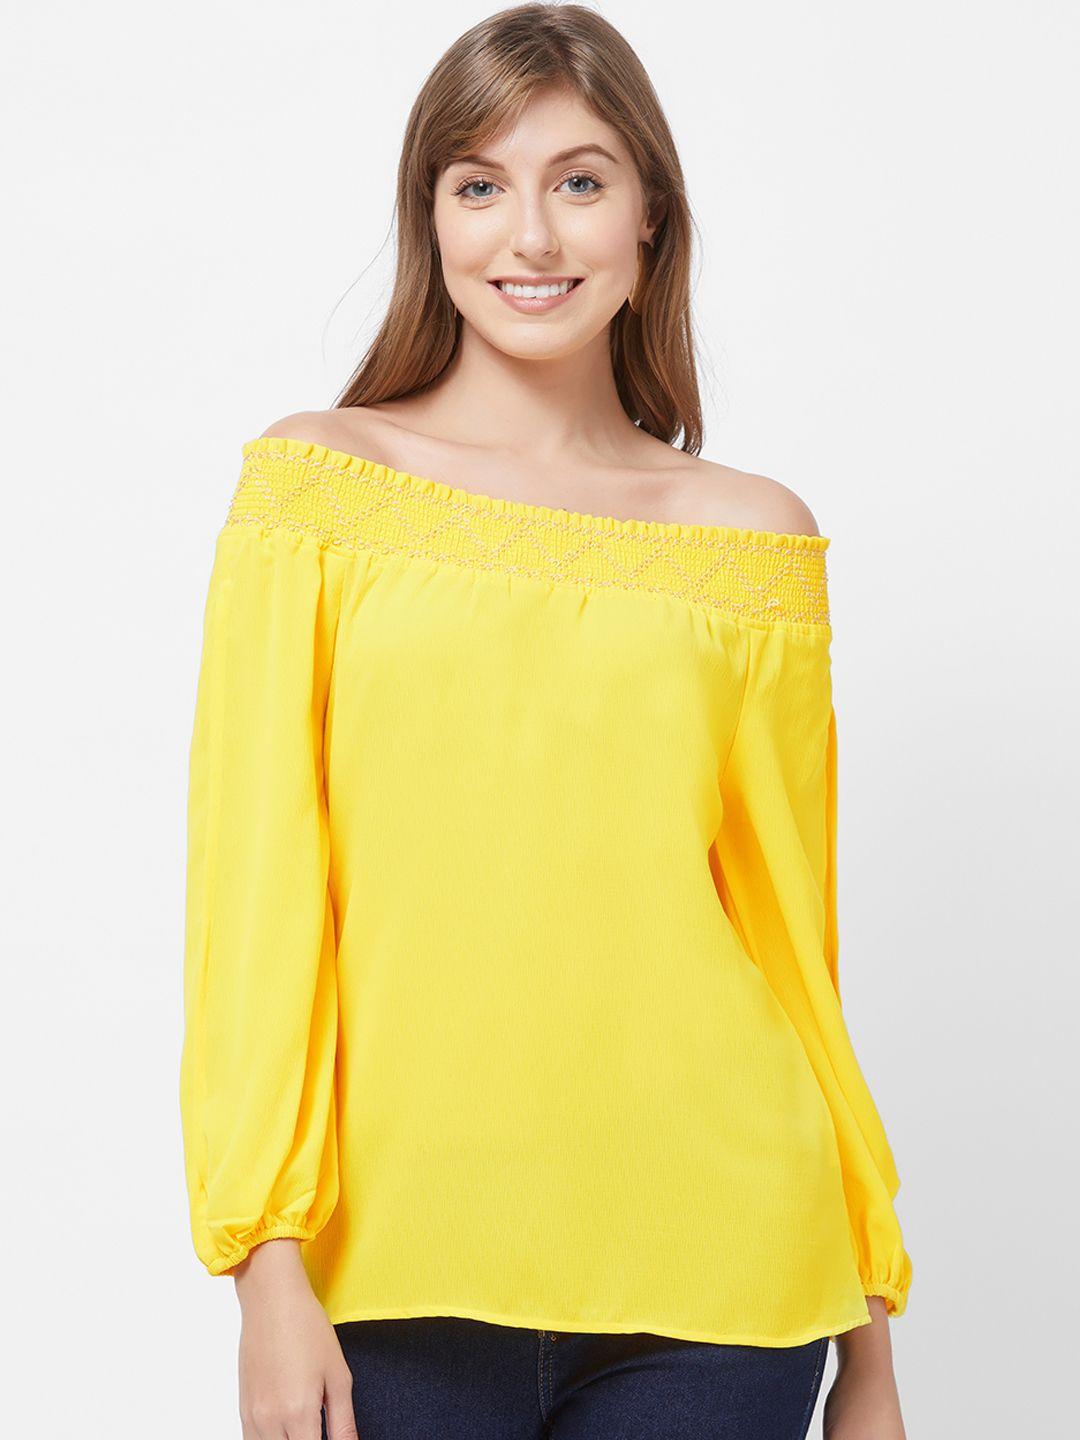 109f women yellow solid bardot top